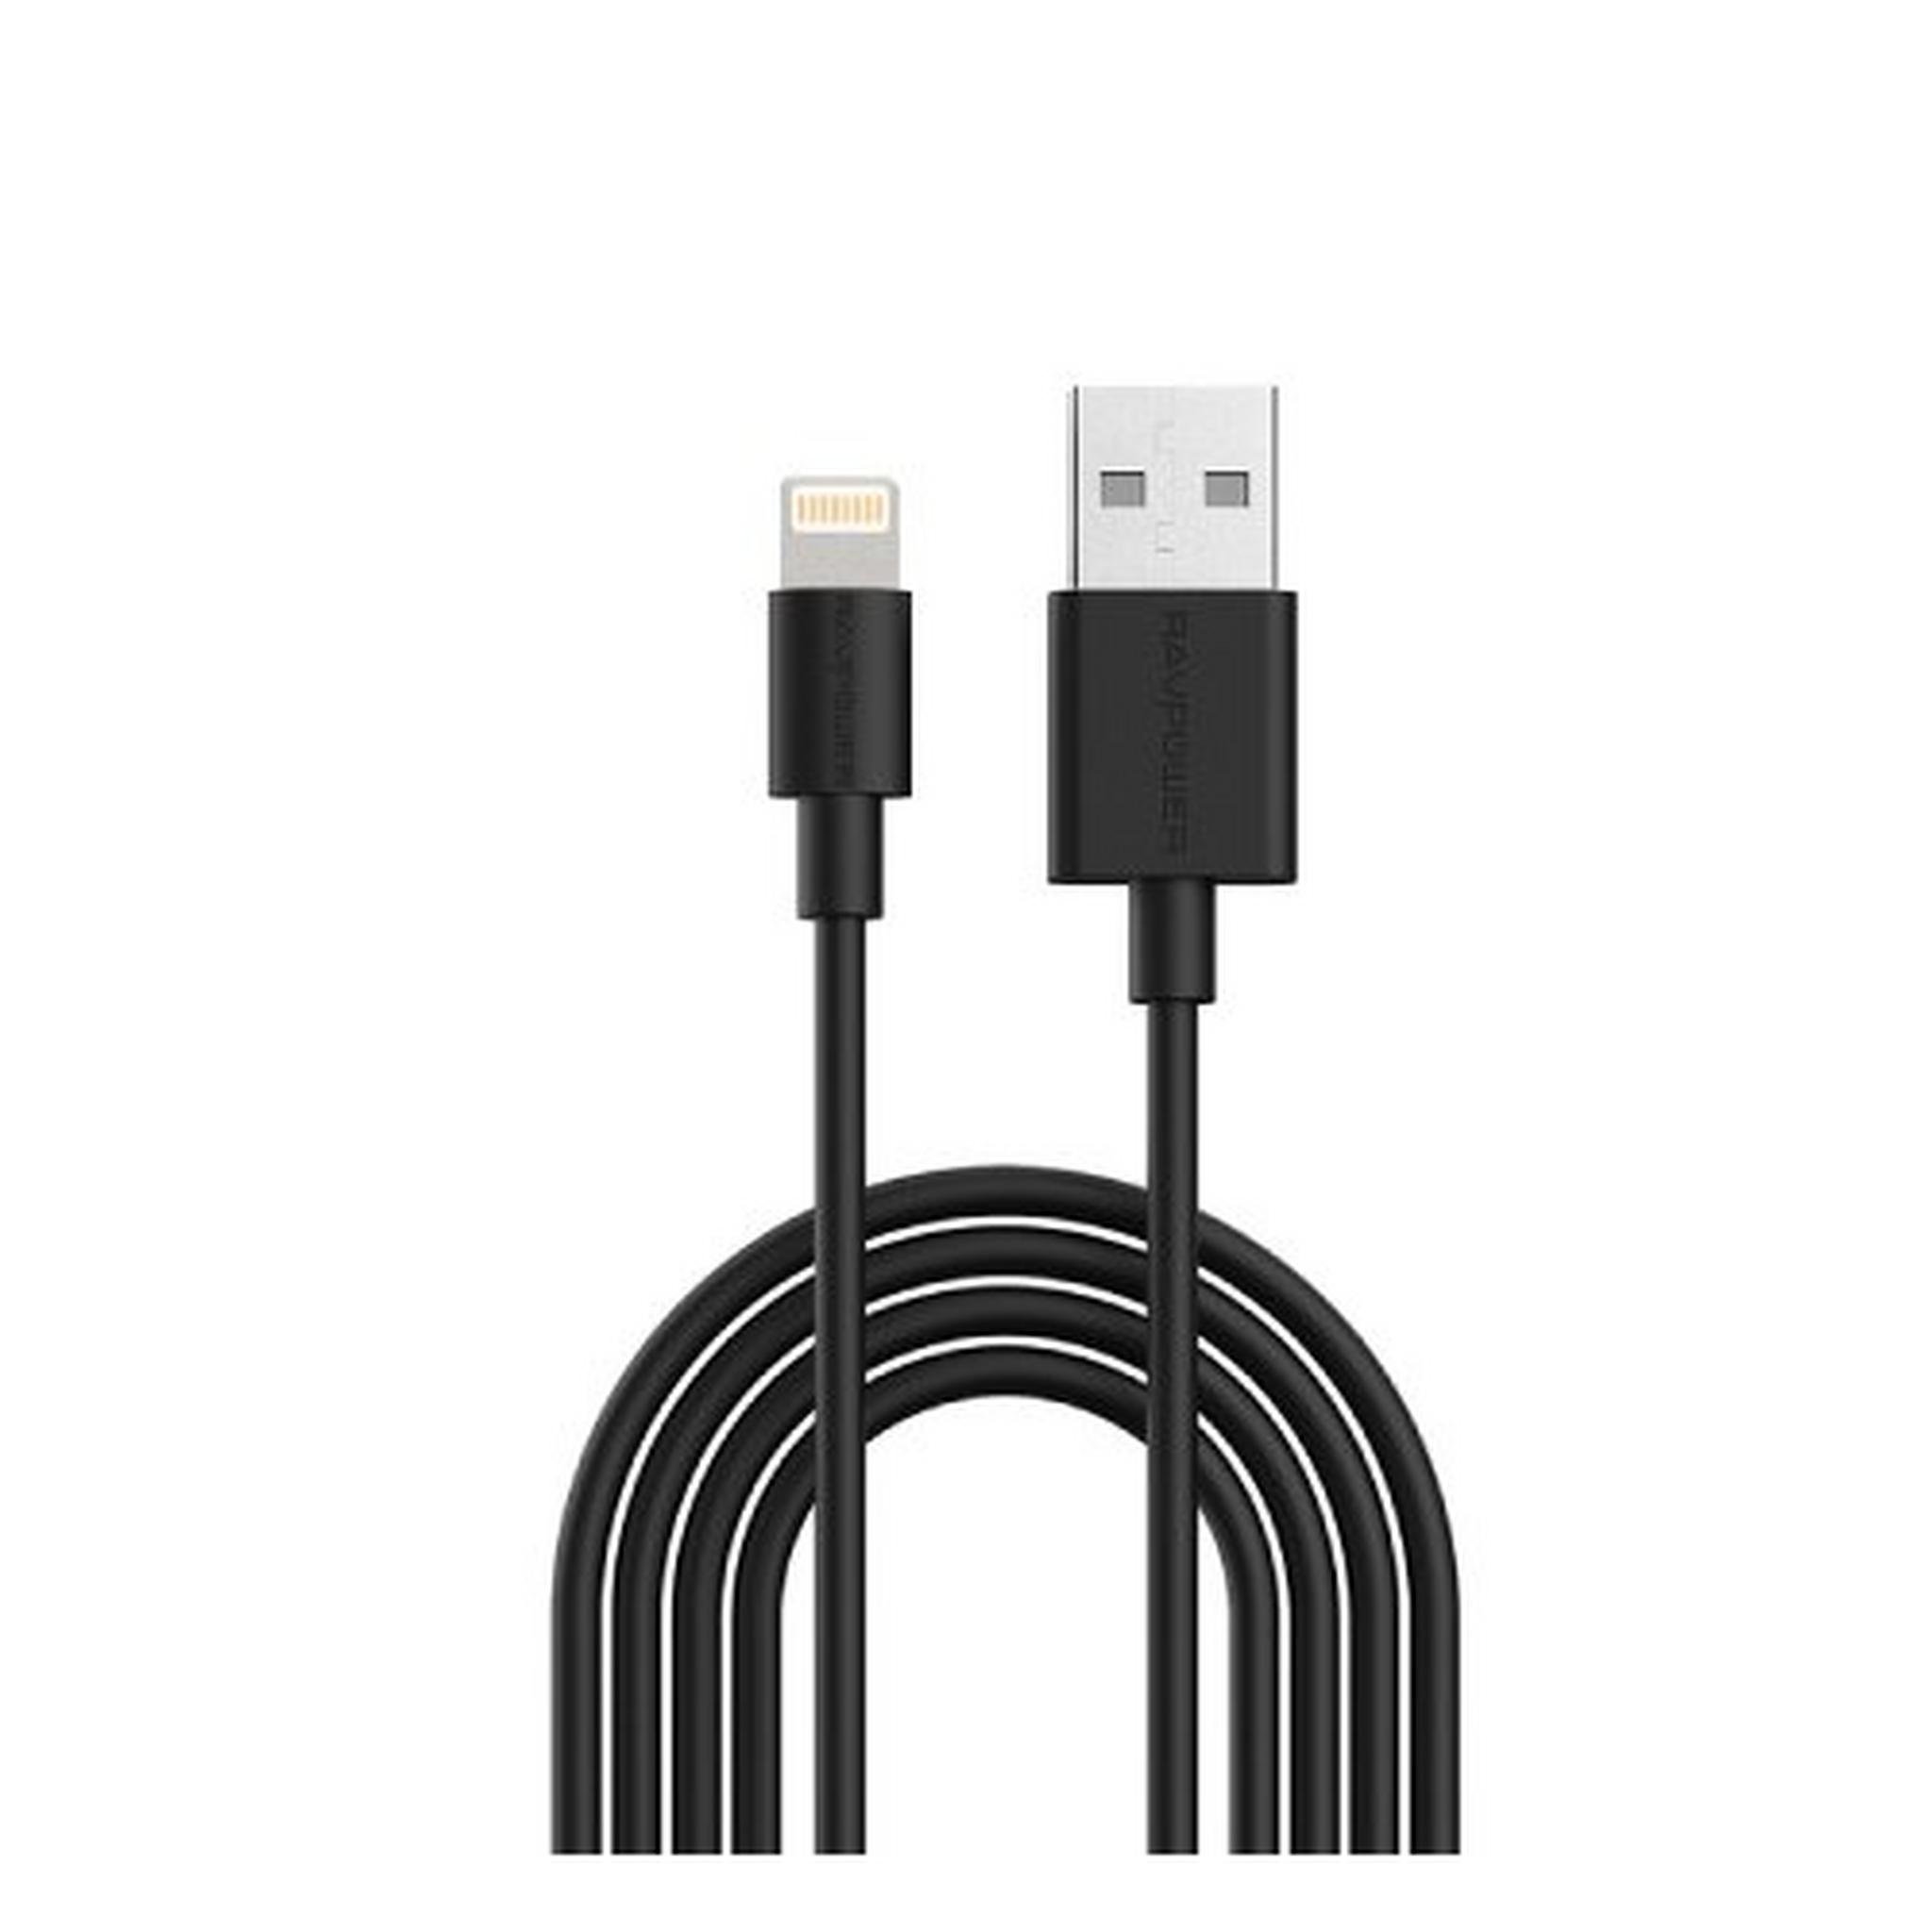 RAVPower USB lightening cable 1M (RP-CB030) - Black